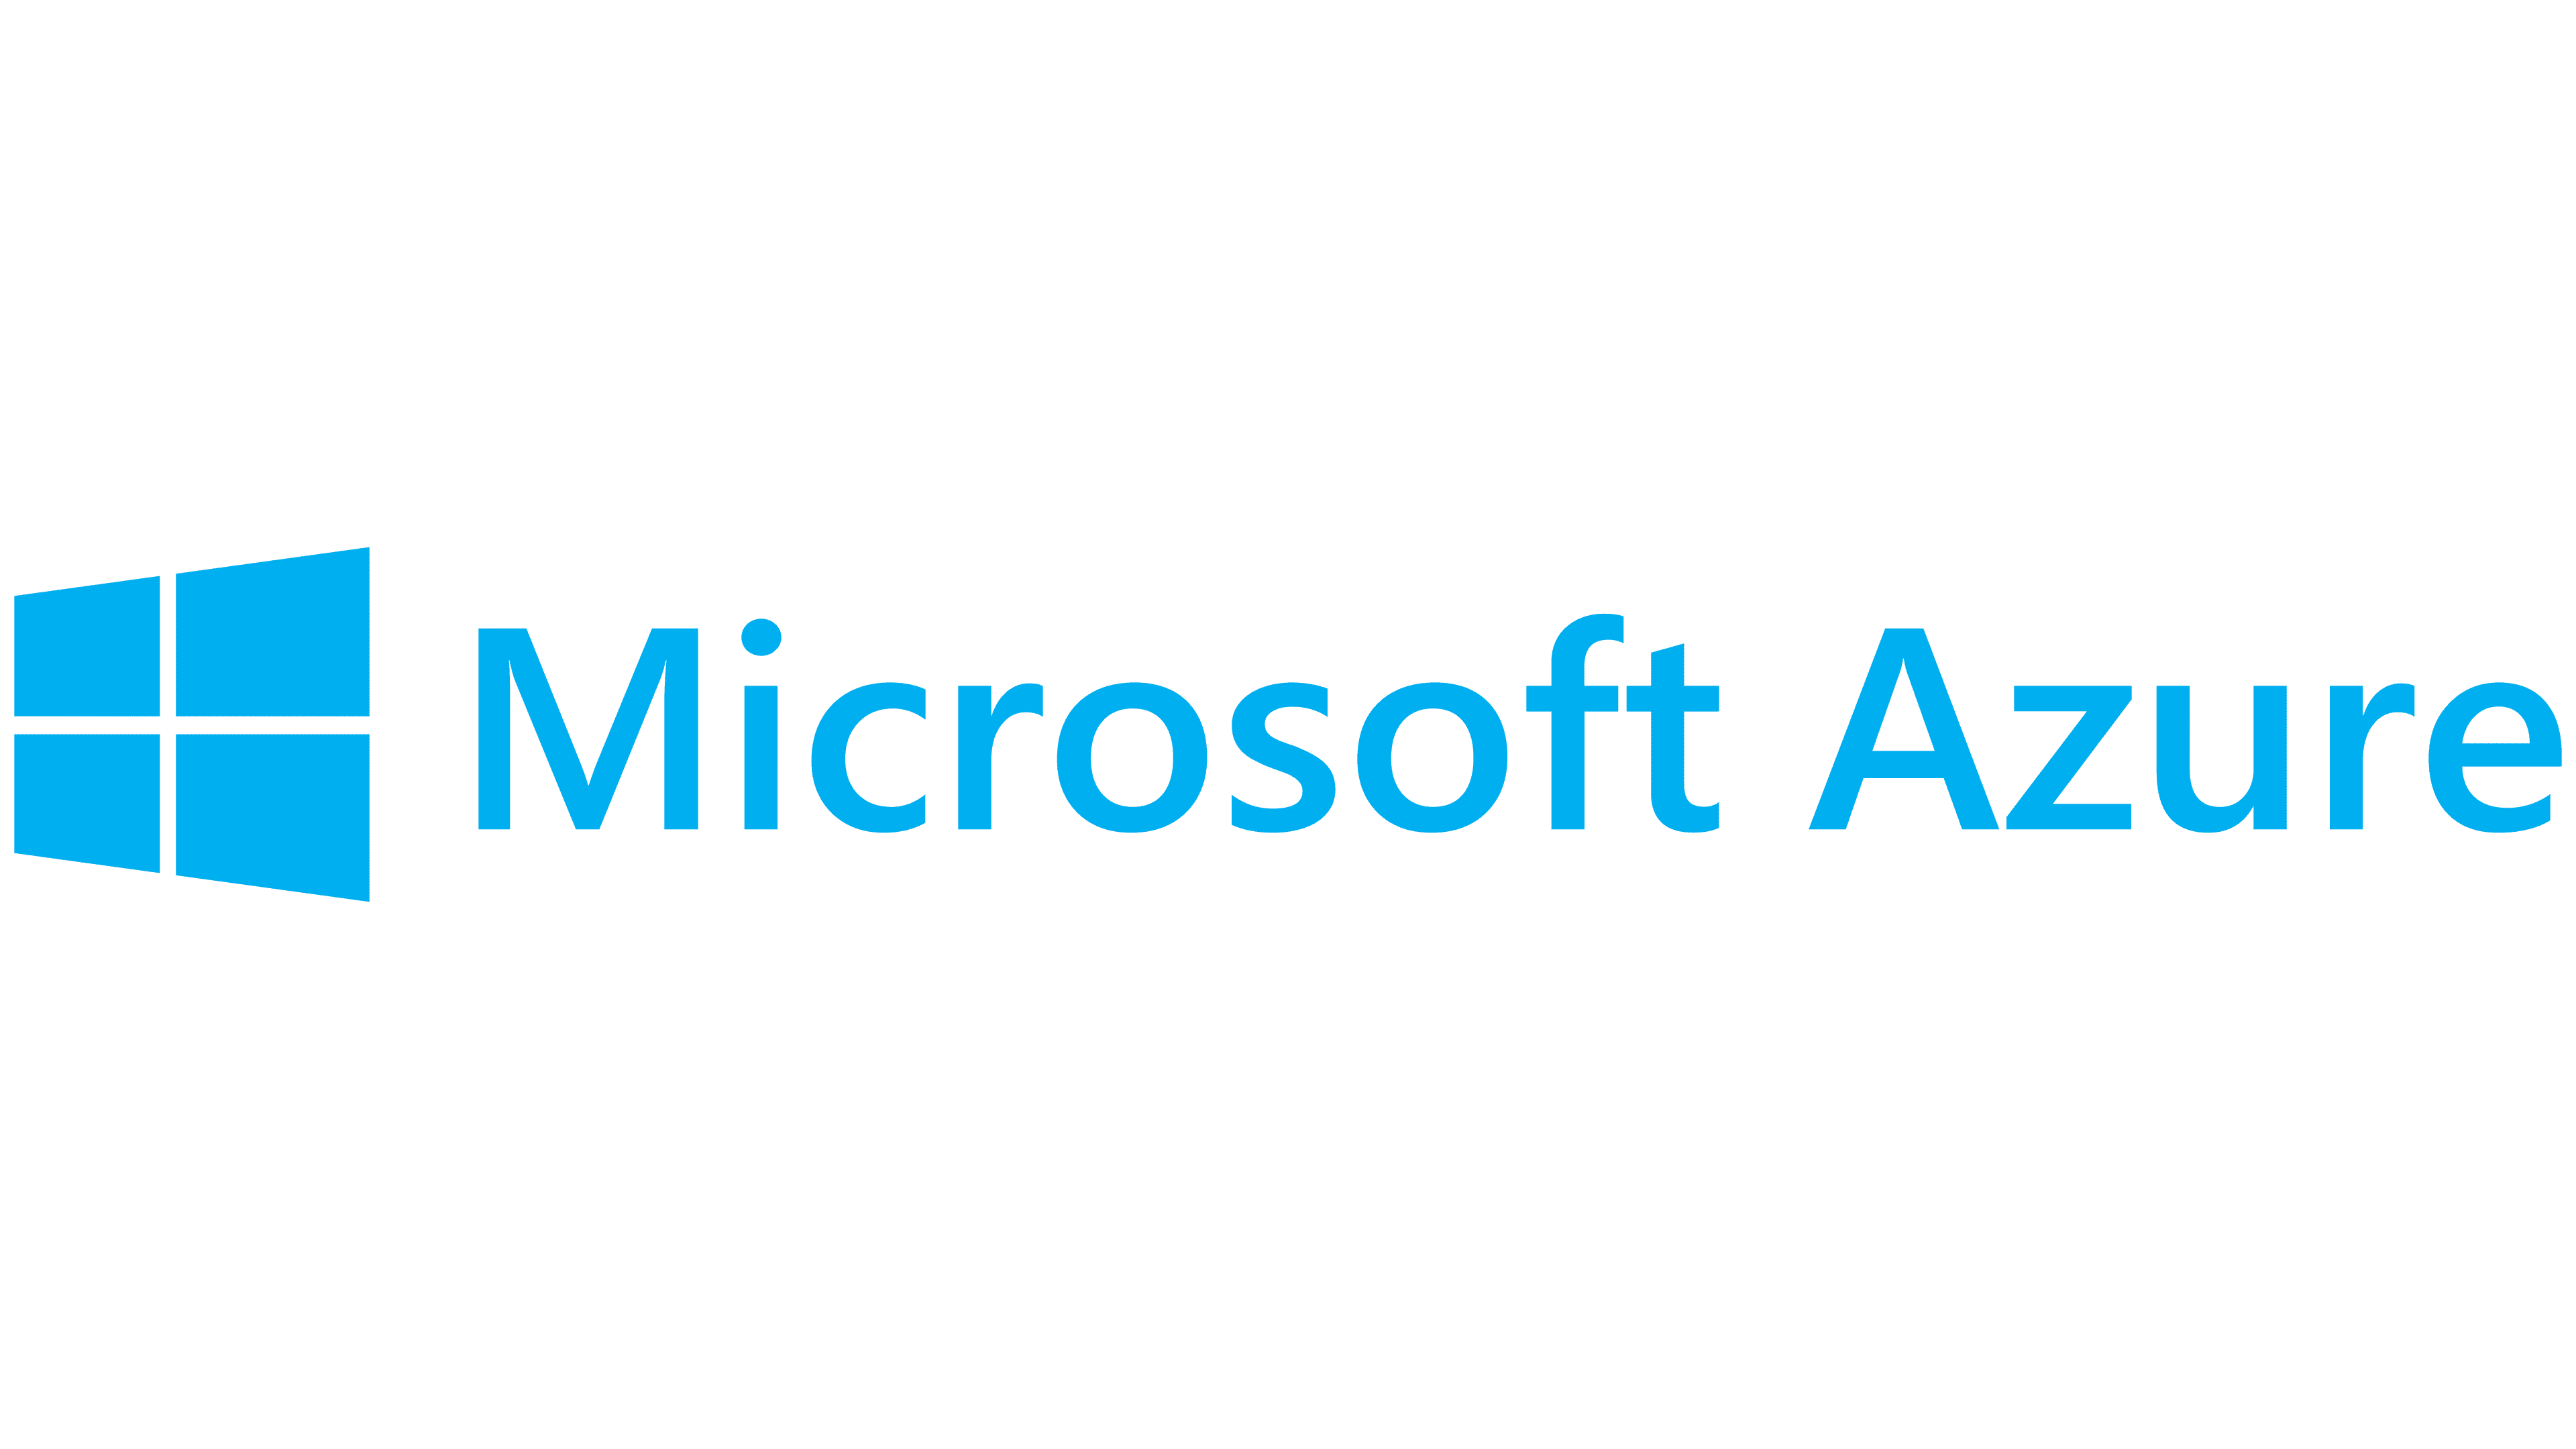 Windows Azure Logo 2012 2014 